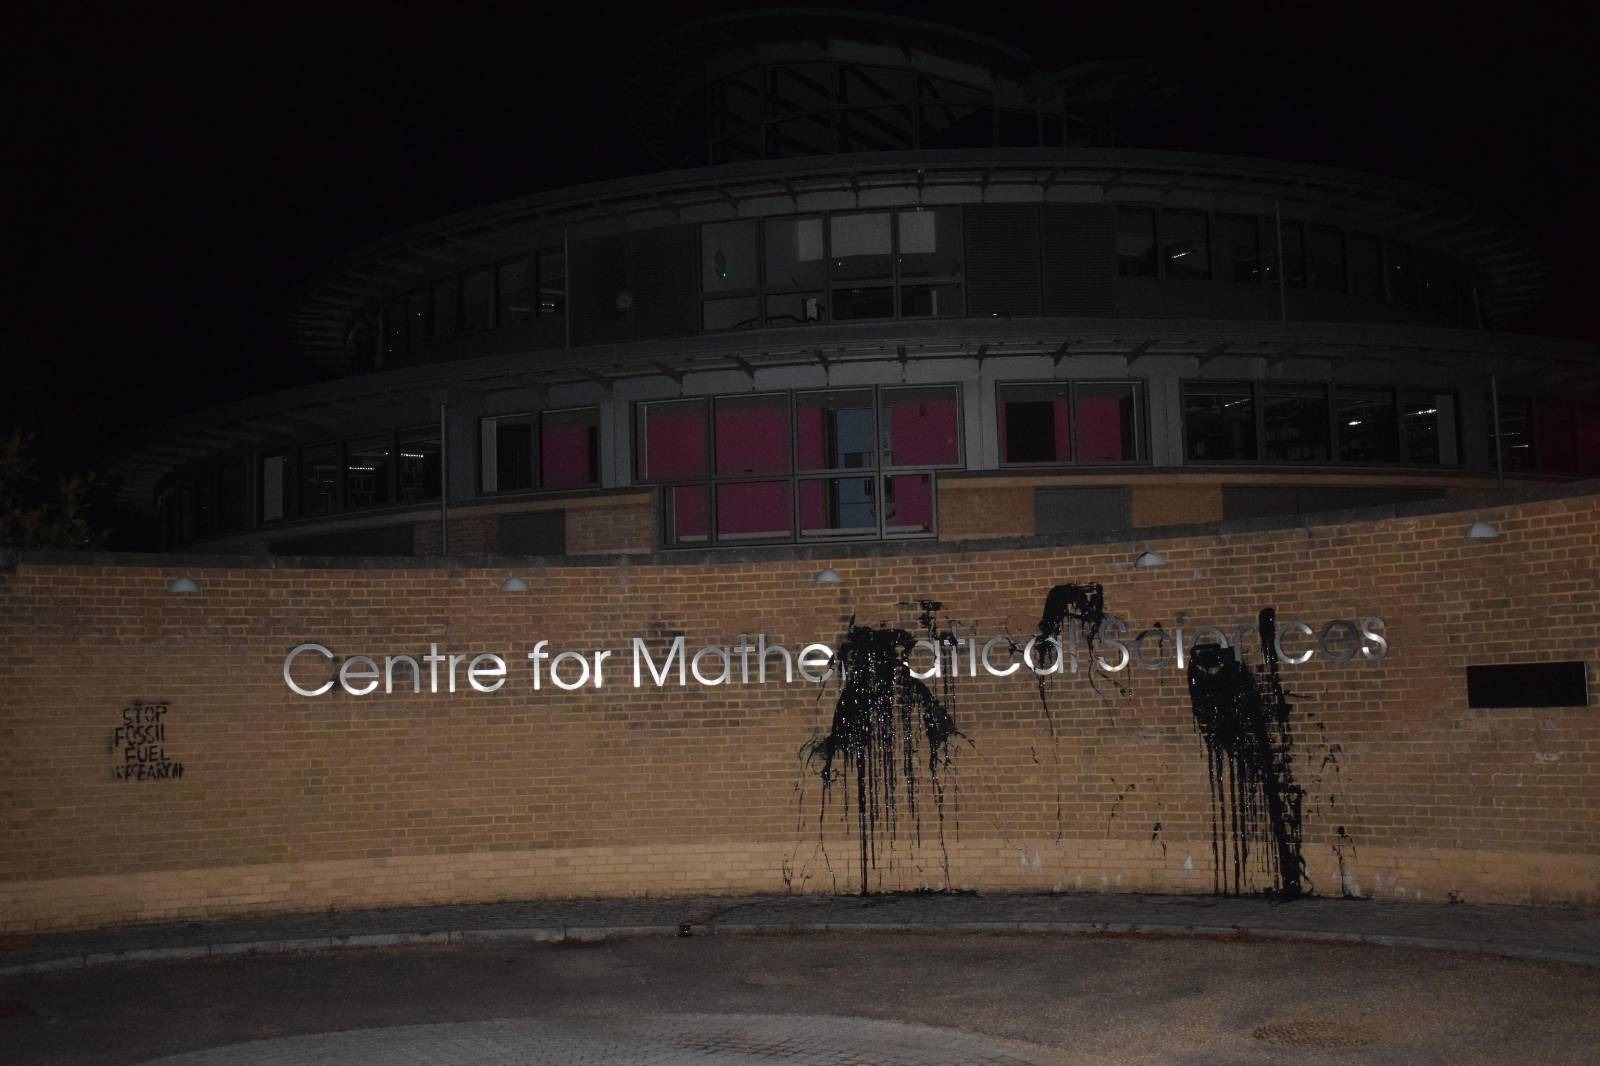 20/09/2022: Black paint thrown on Cambridge Centre for Mathematical Sciences